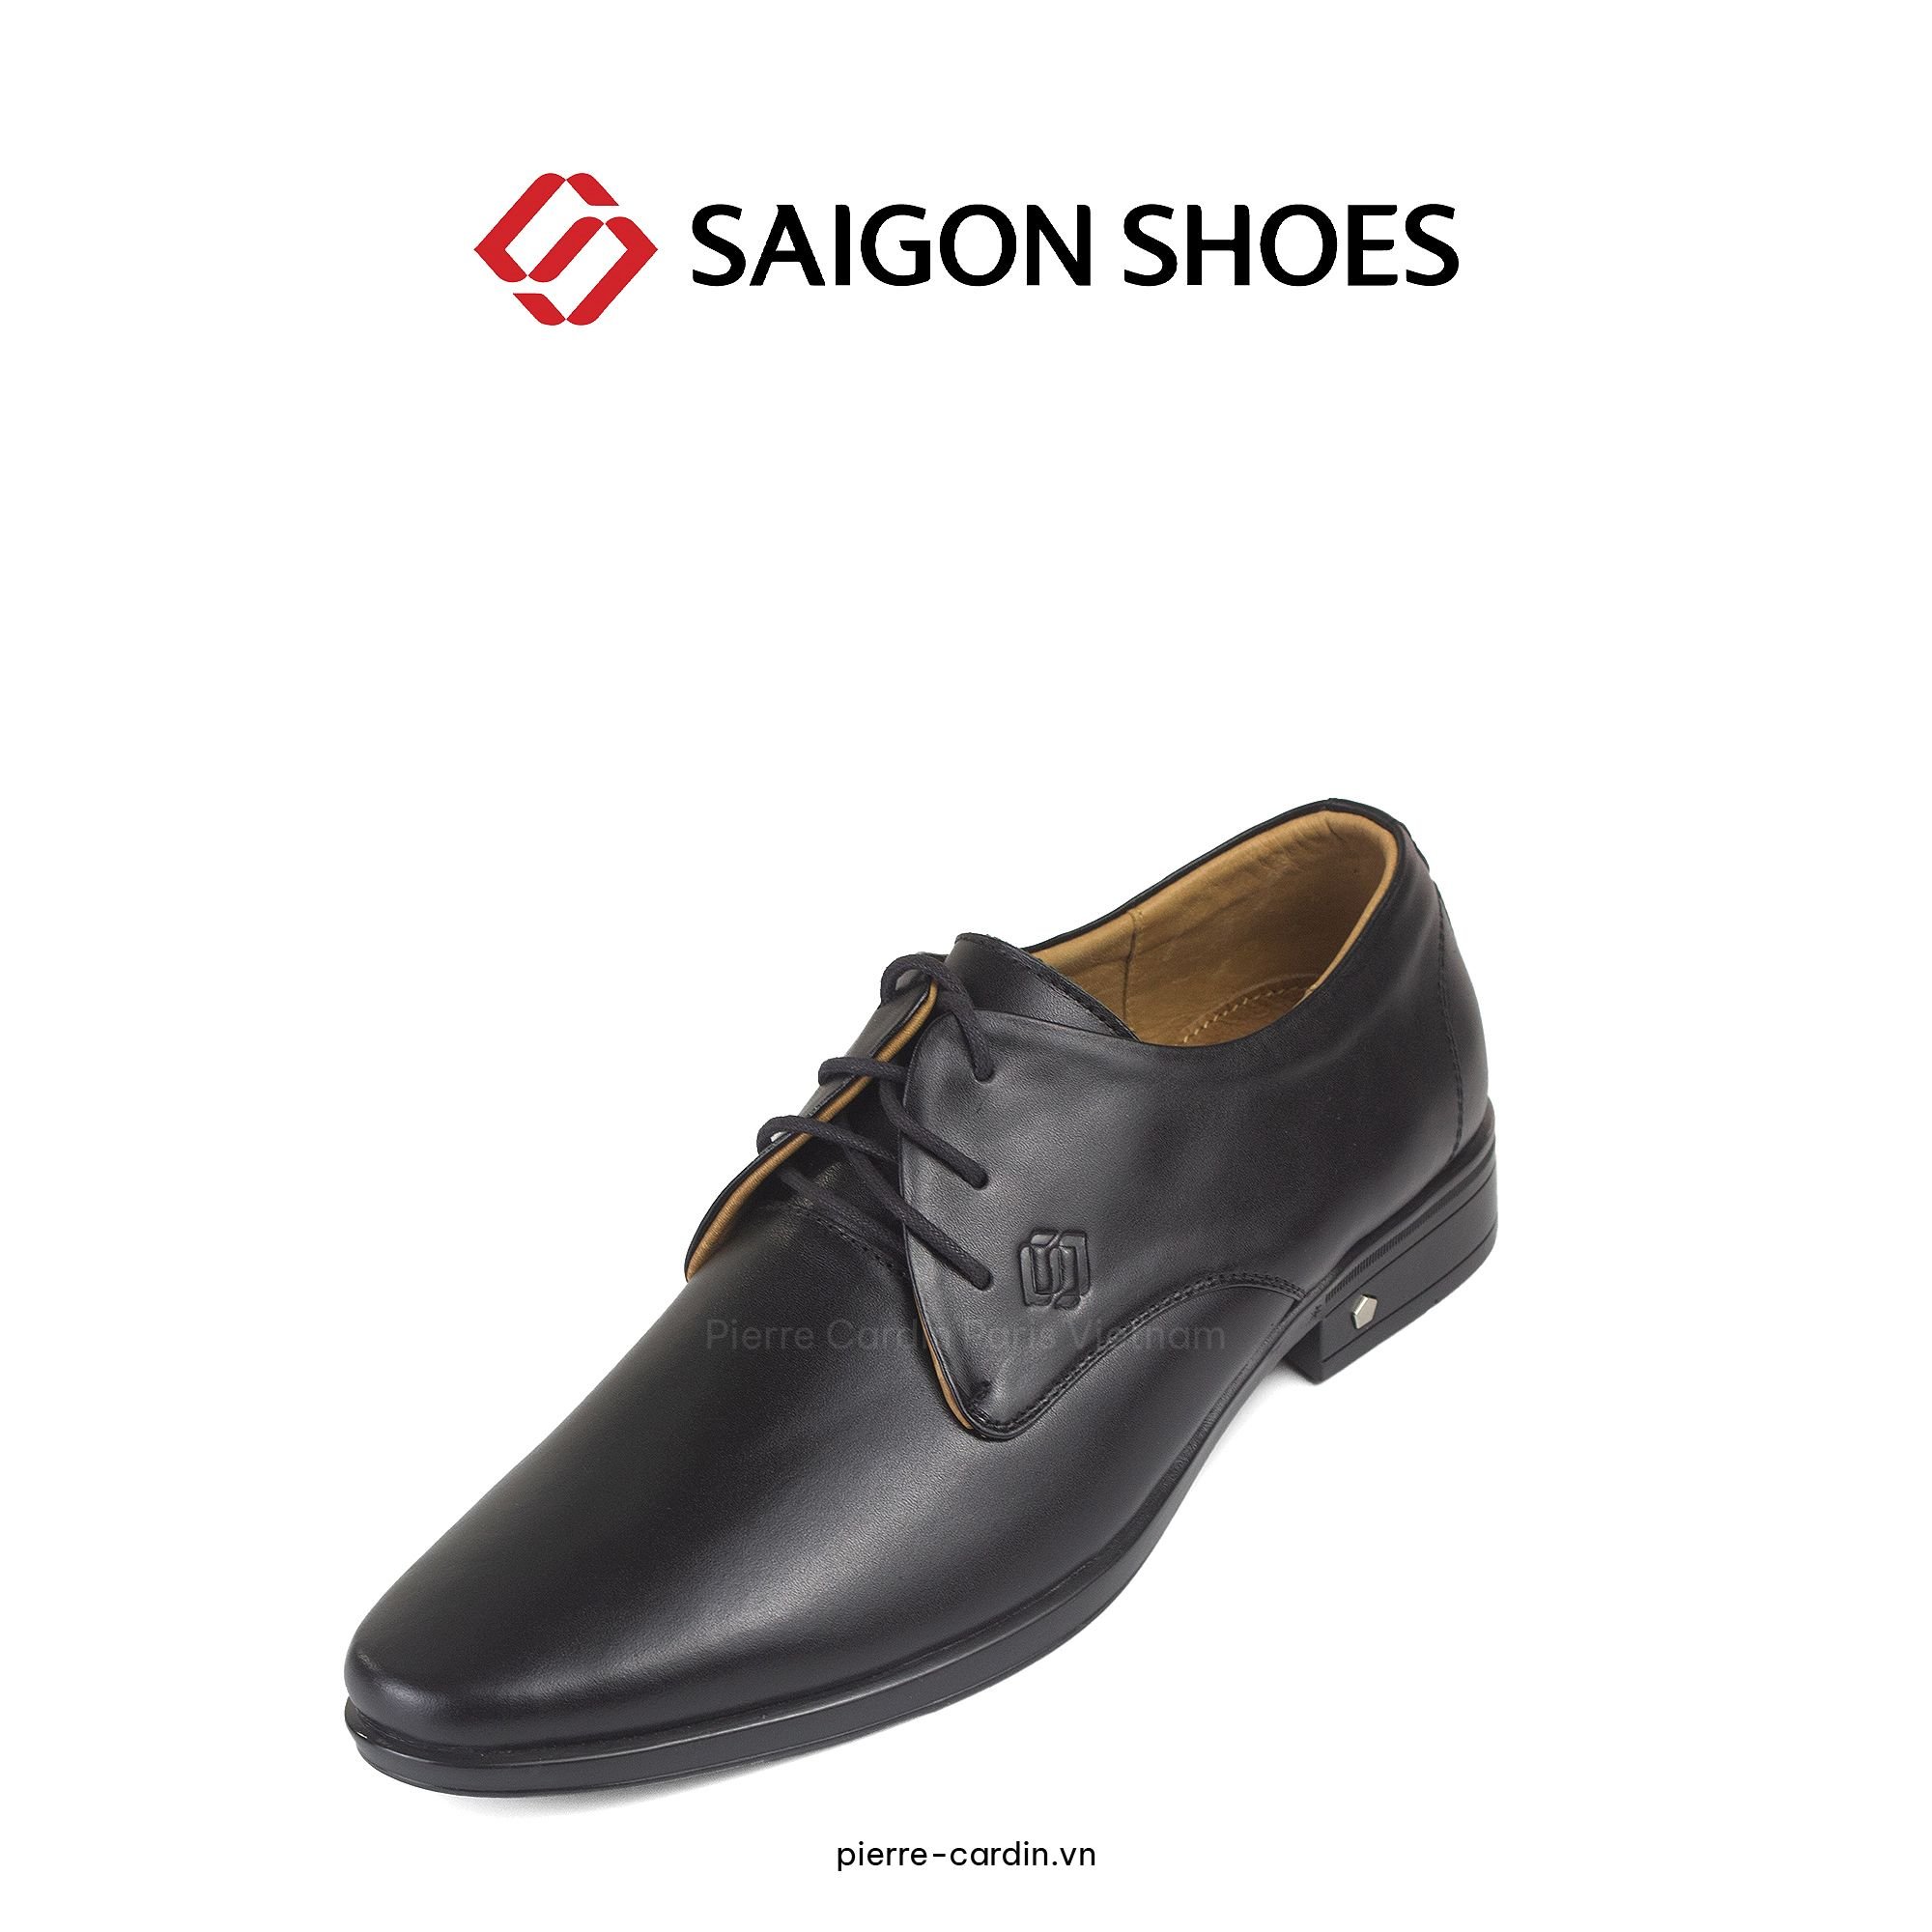 Pierre Cardin Paris Vietnam: Giày Derby Cổ Điển Saigon Shoes - SGMFWLH 011